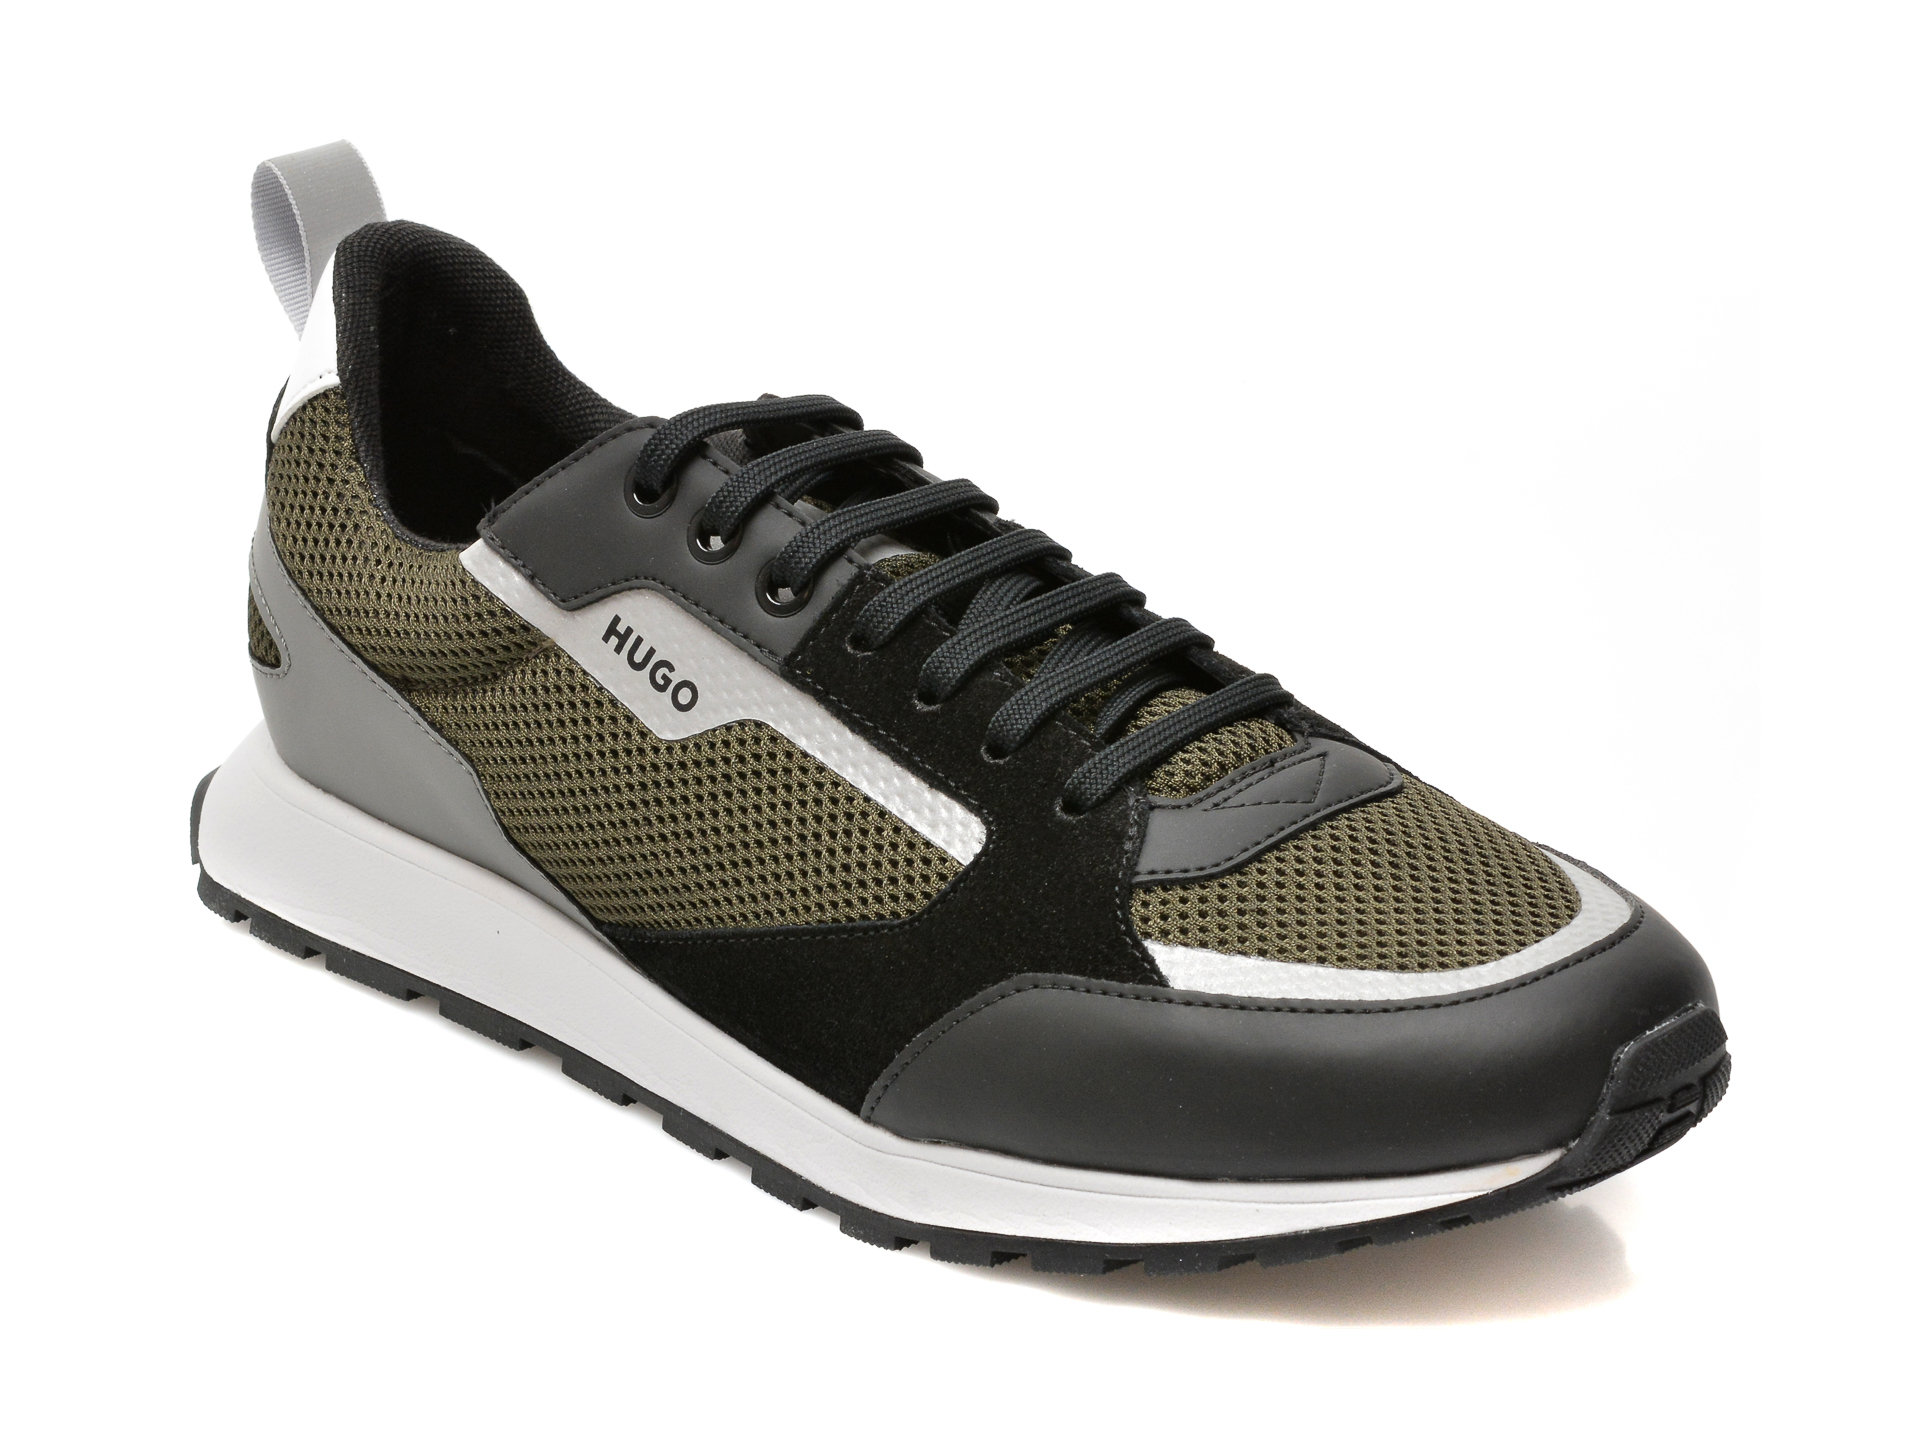 Pantofi sport HUGO BOSS negri, 360, din material textil si piele naturala Hugo Boss